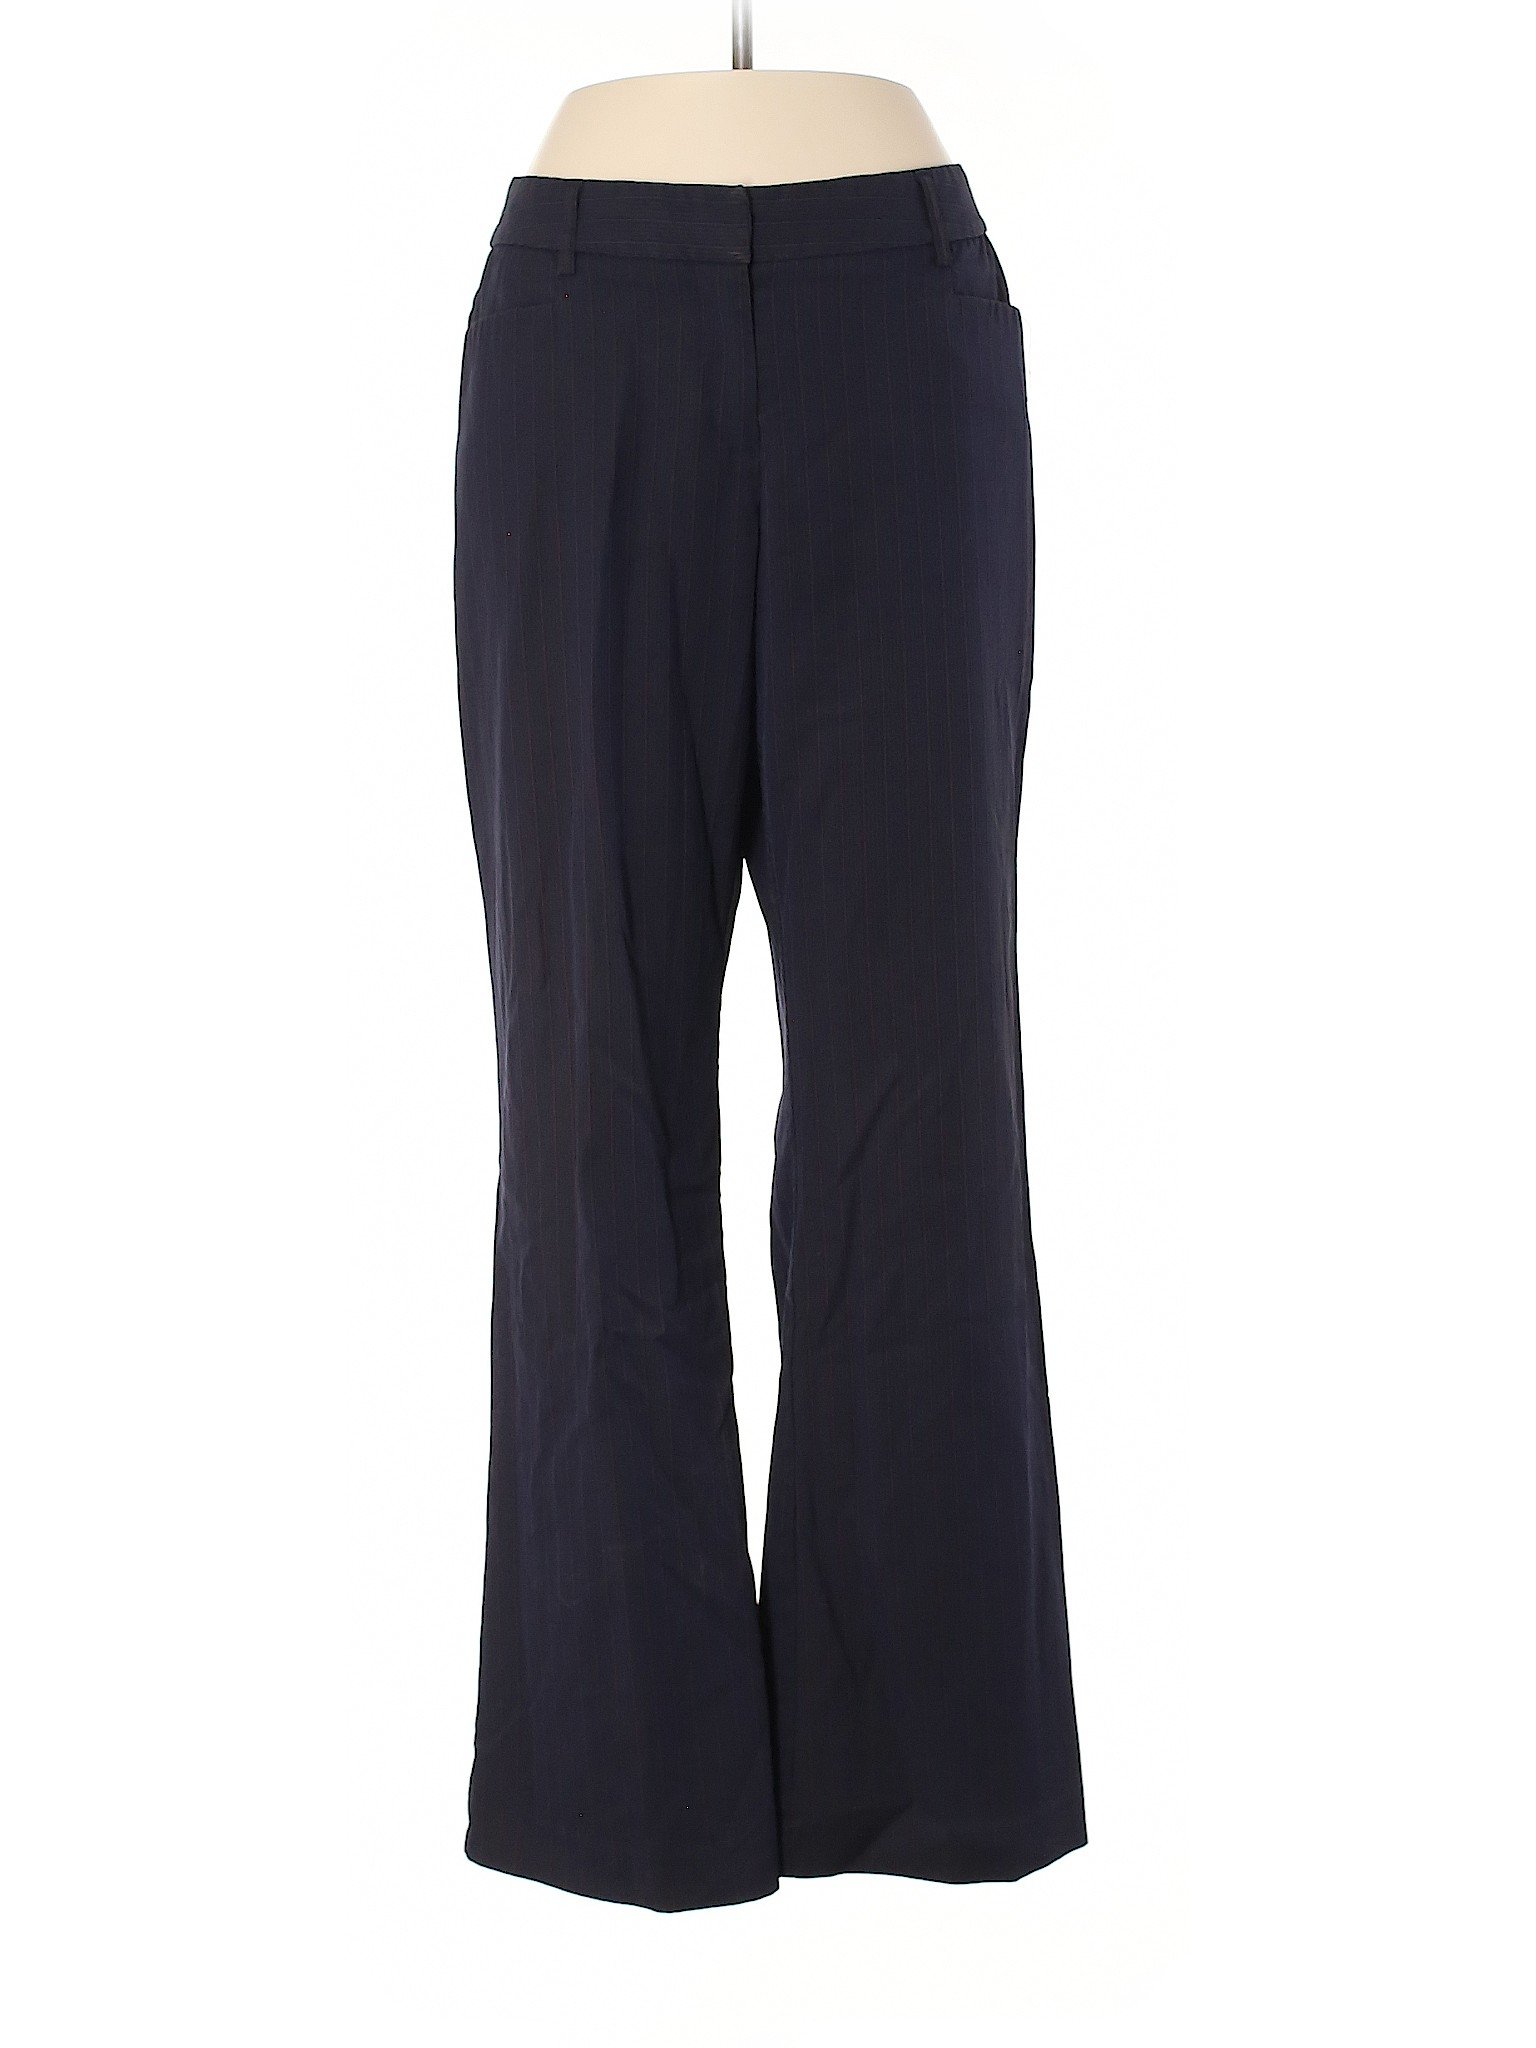 Apt. 9 Women Blue Dress Pants 12 | eBay